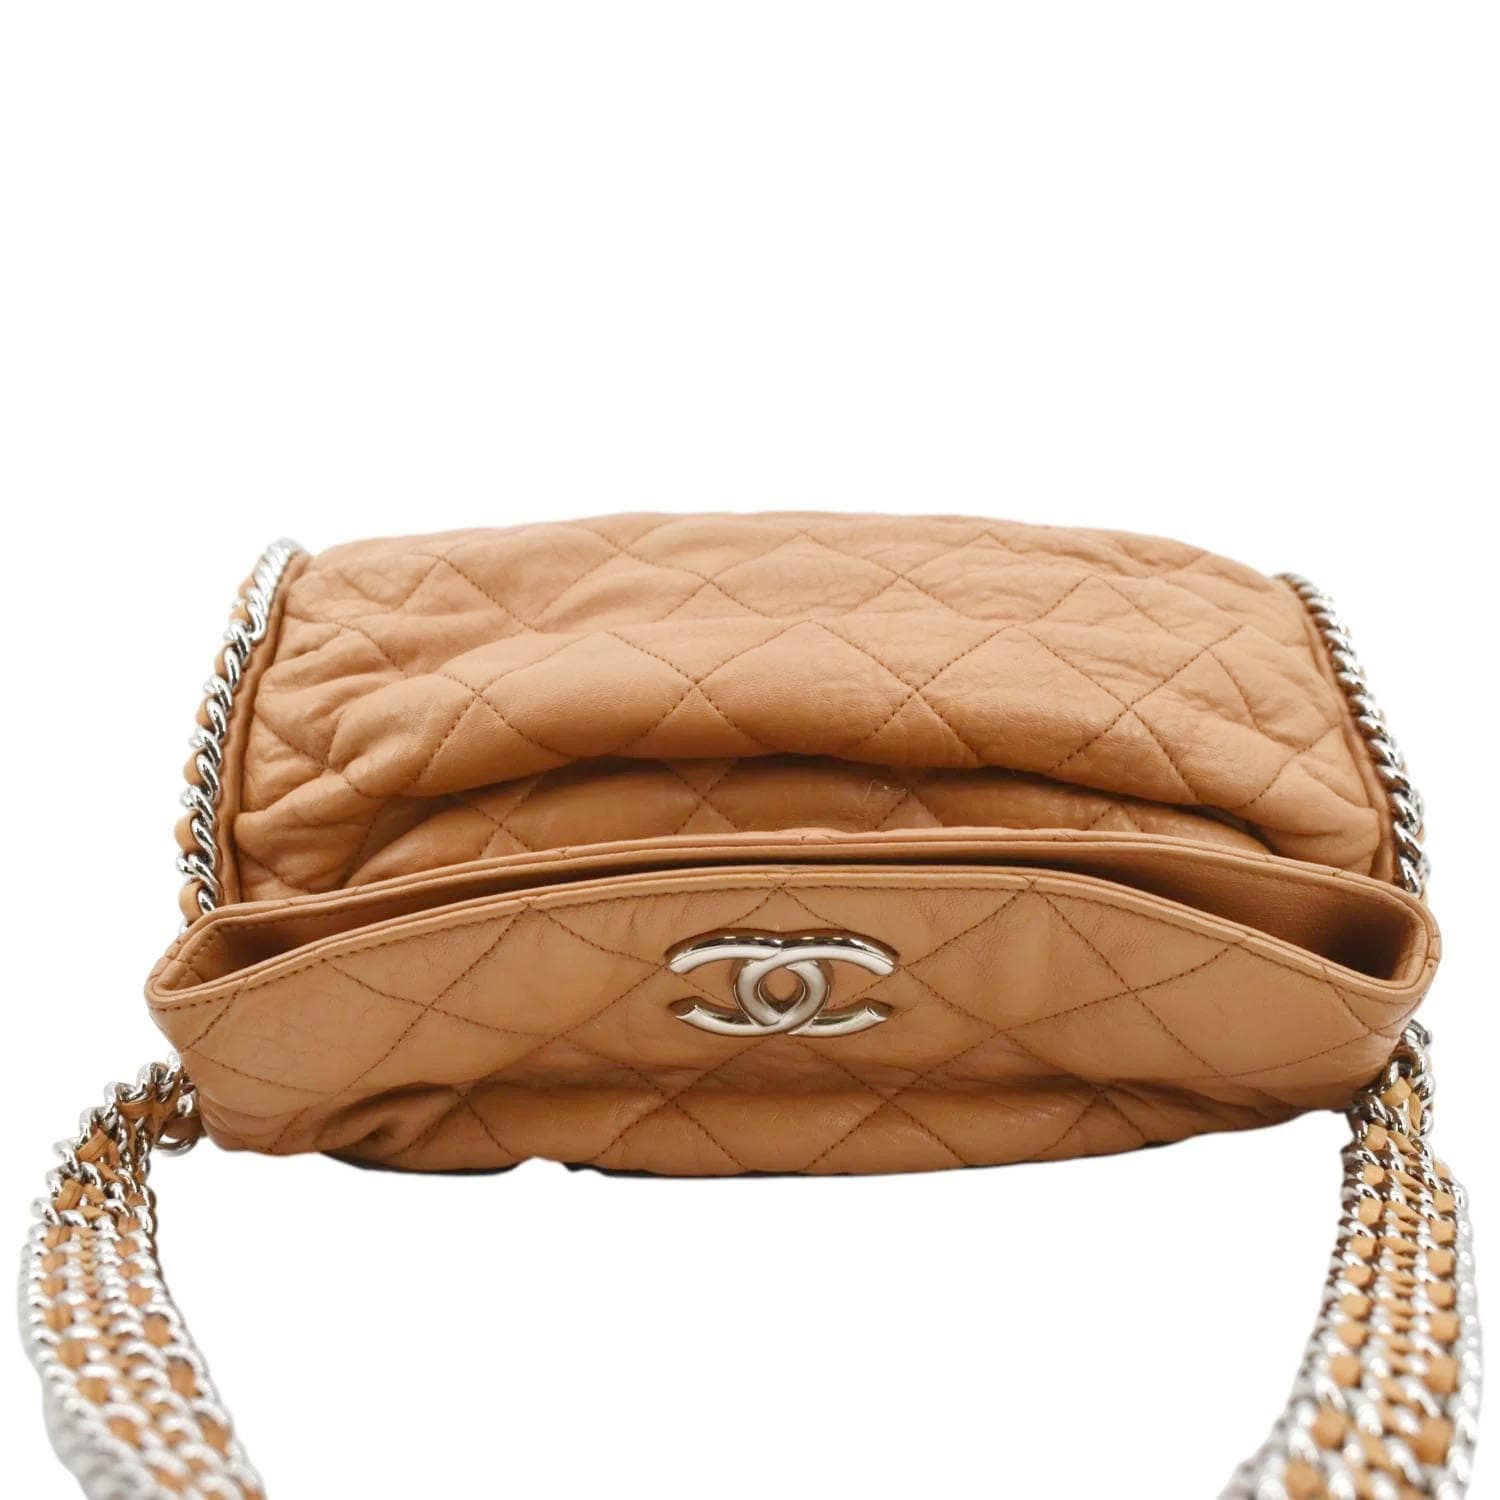 Chanel Seasonal Chain Around Hobo, Black Lambskin Leather with Gold  Hardware, New in Box WA001